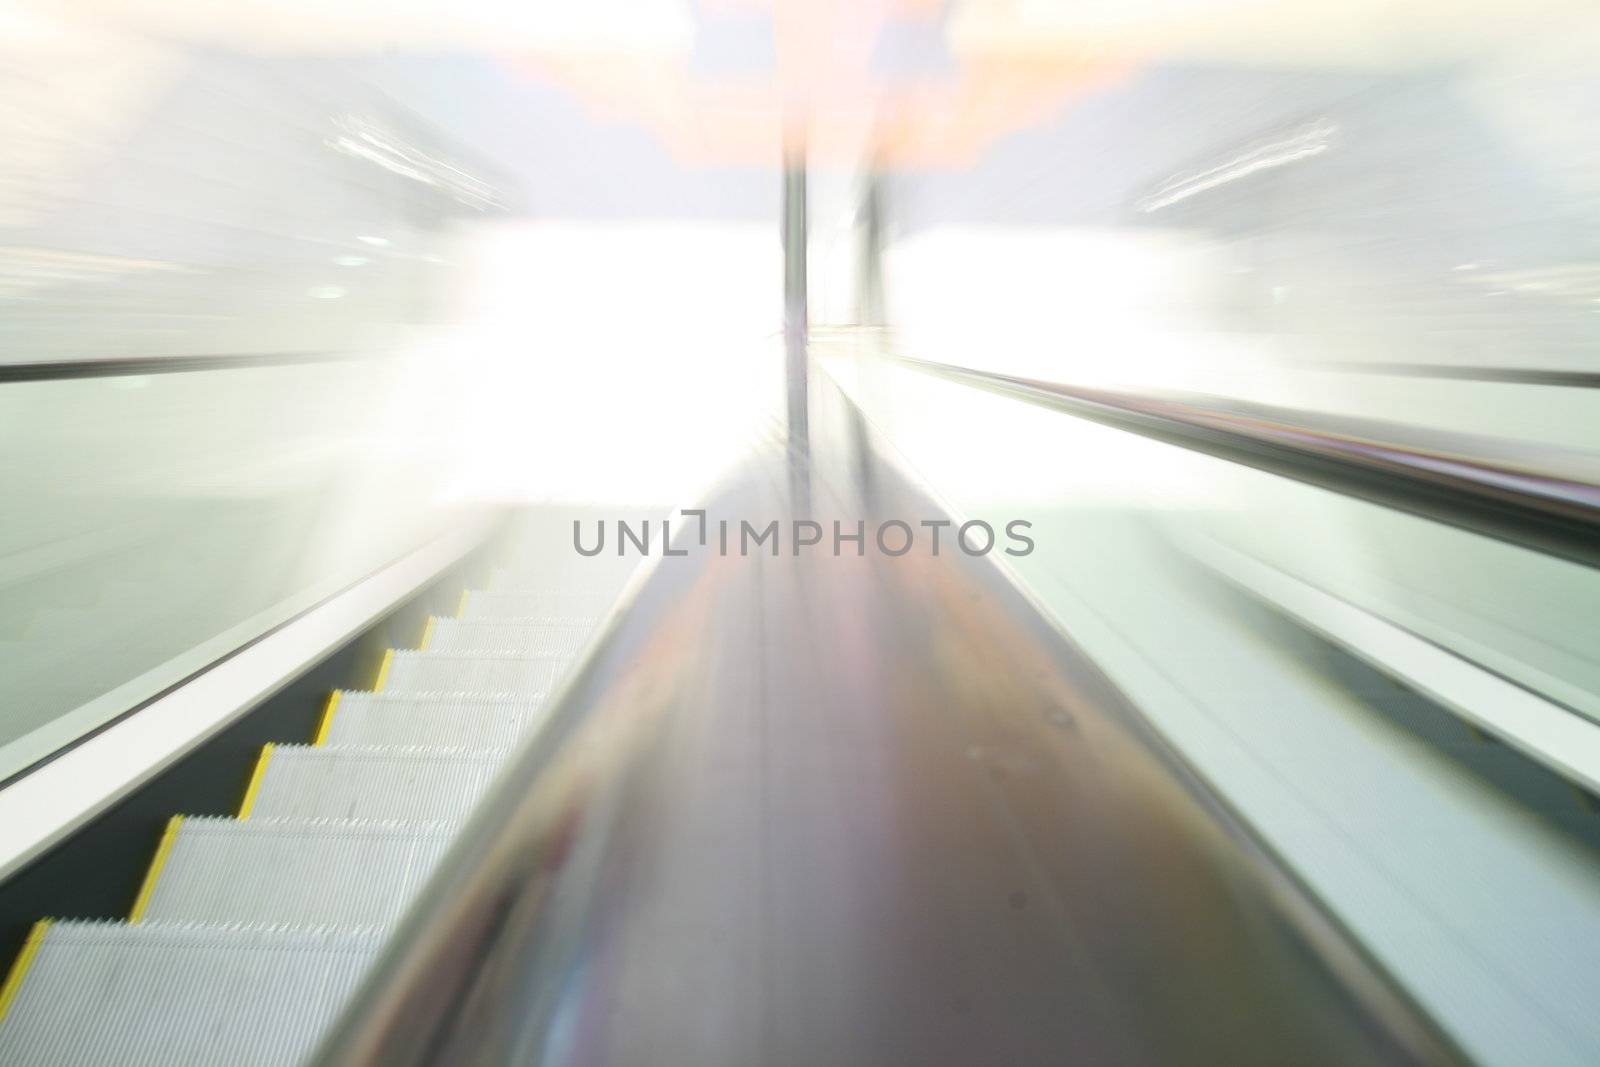 blurred escalator speed transportation background